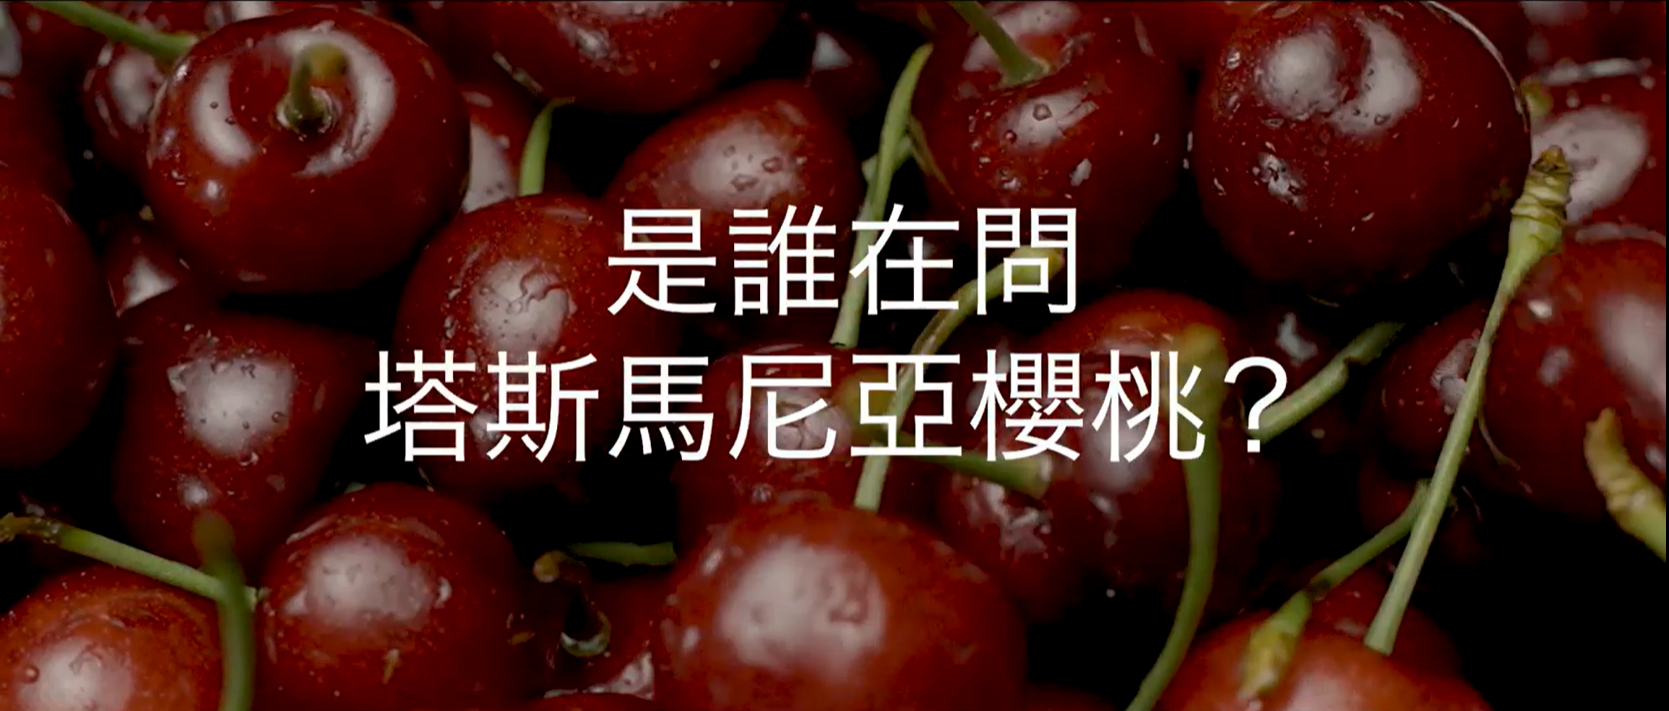 Taiwan Cherry Ad Banner